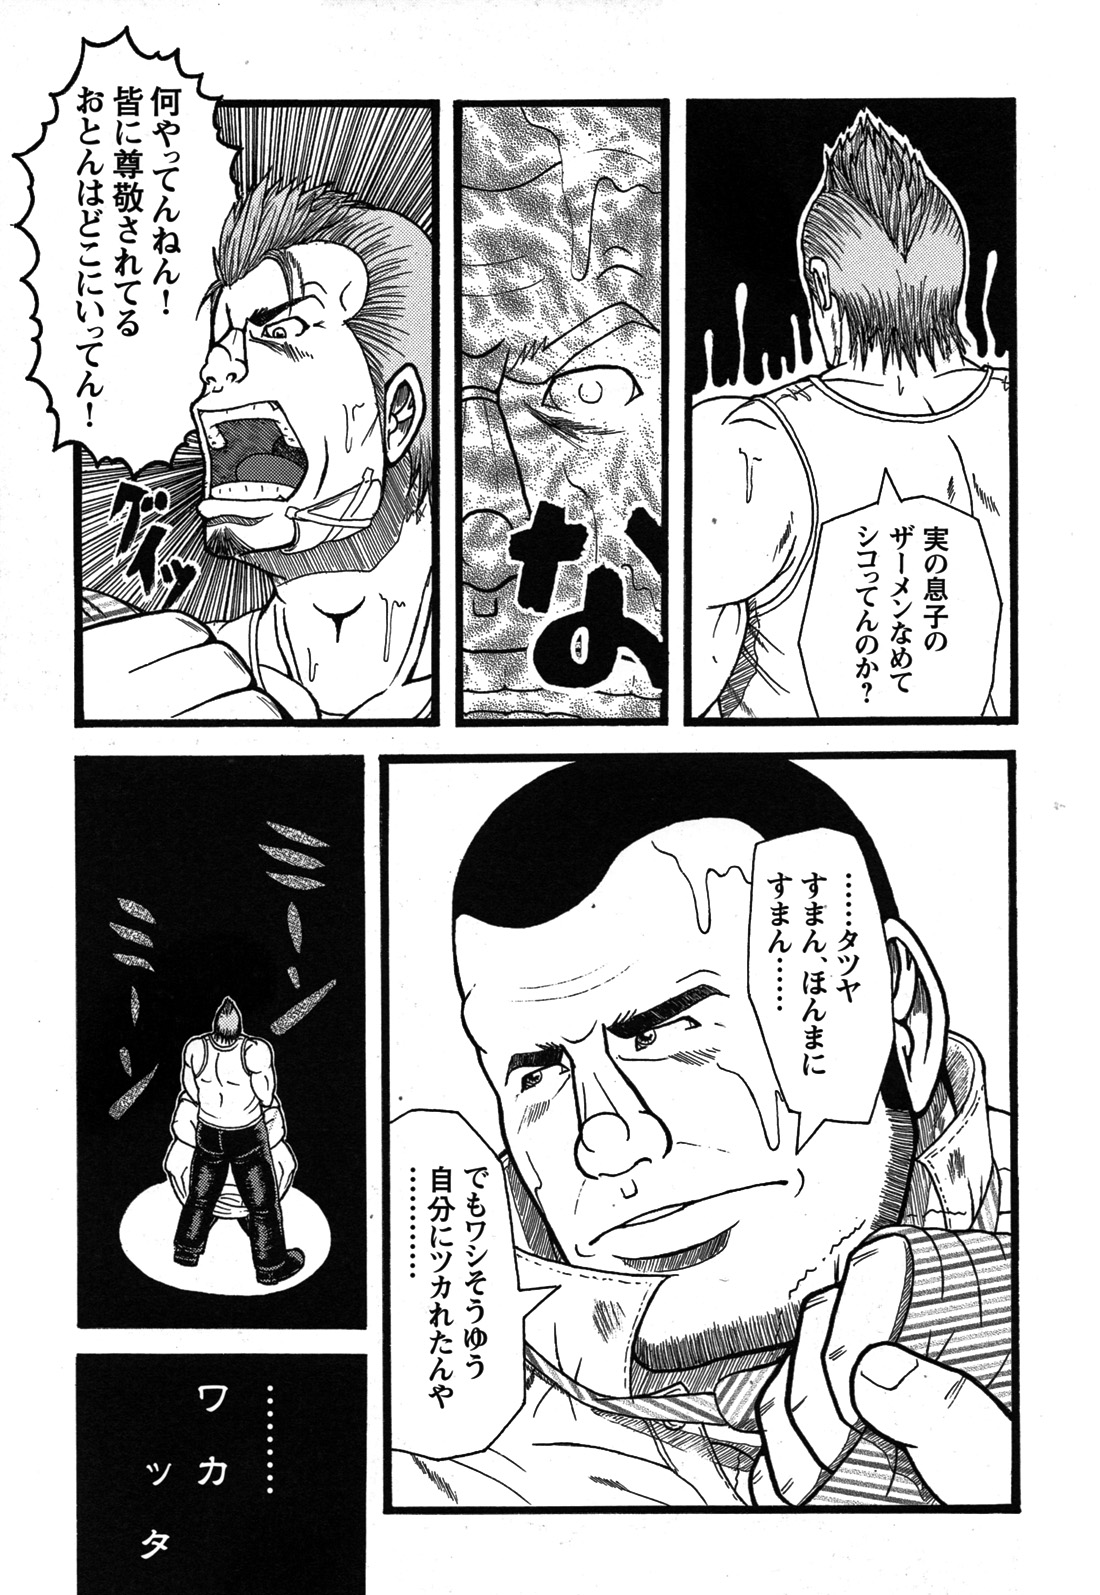 Comic G-men Gaho No.07 